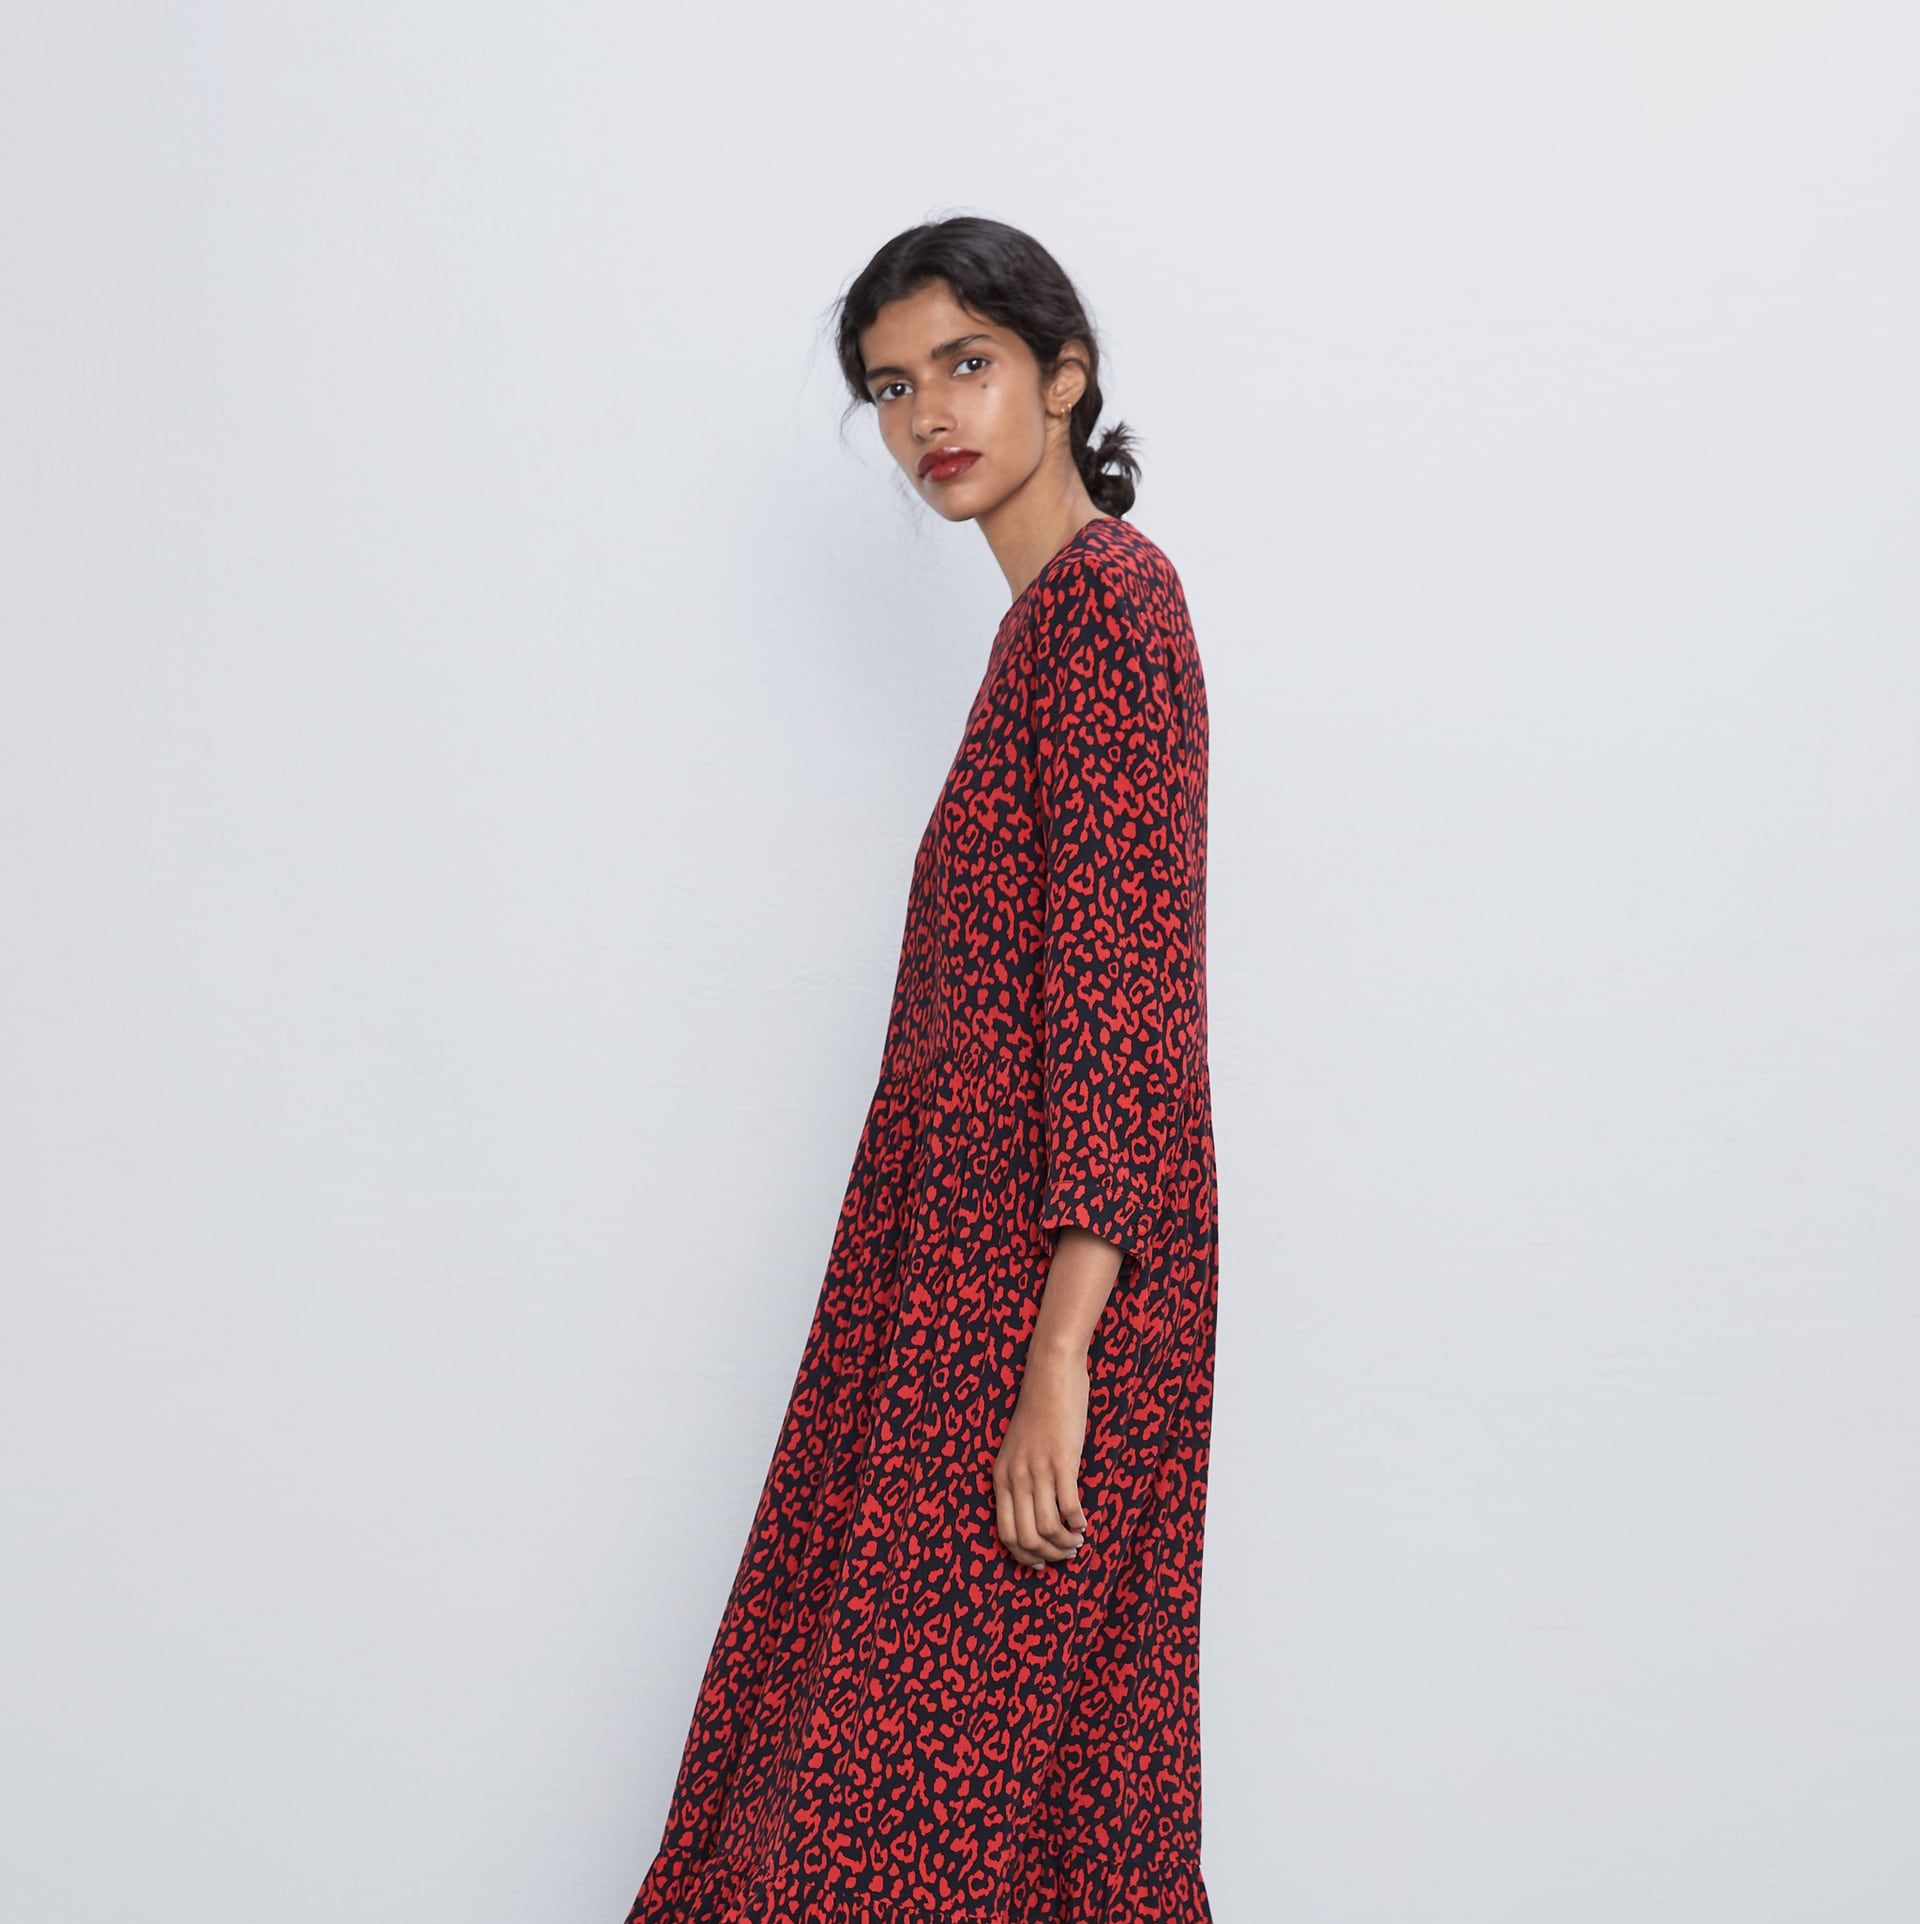 Zara's Red And Black Leopard-Print Dress Is The New 'It Dress